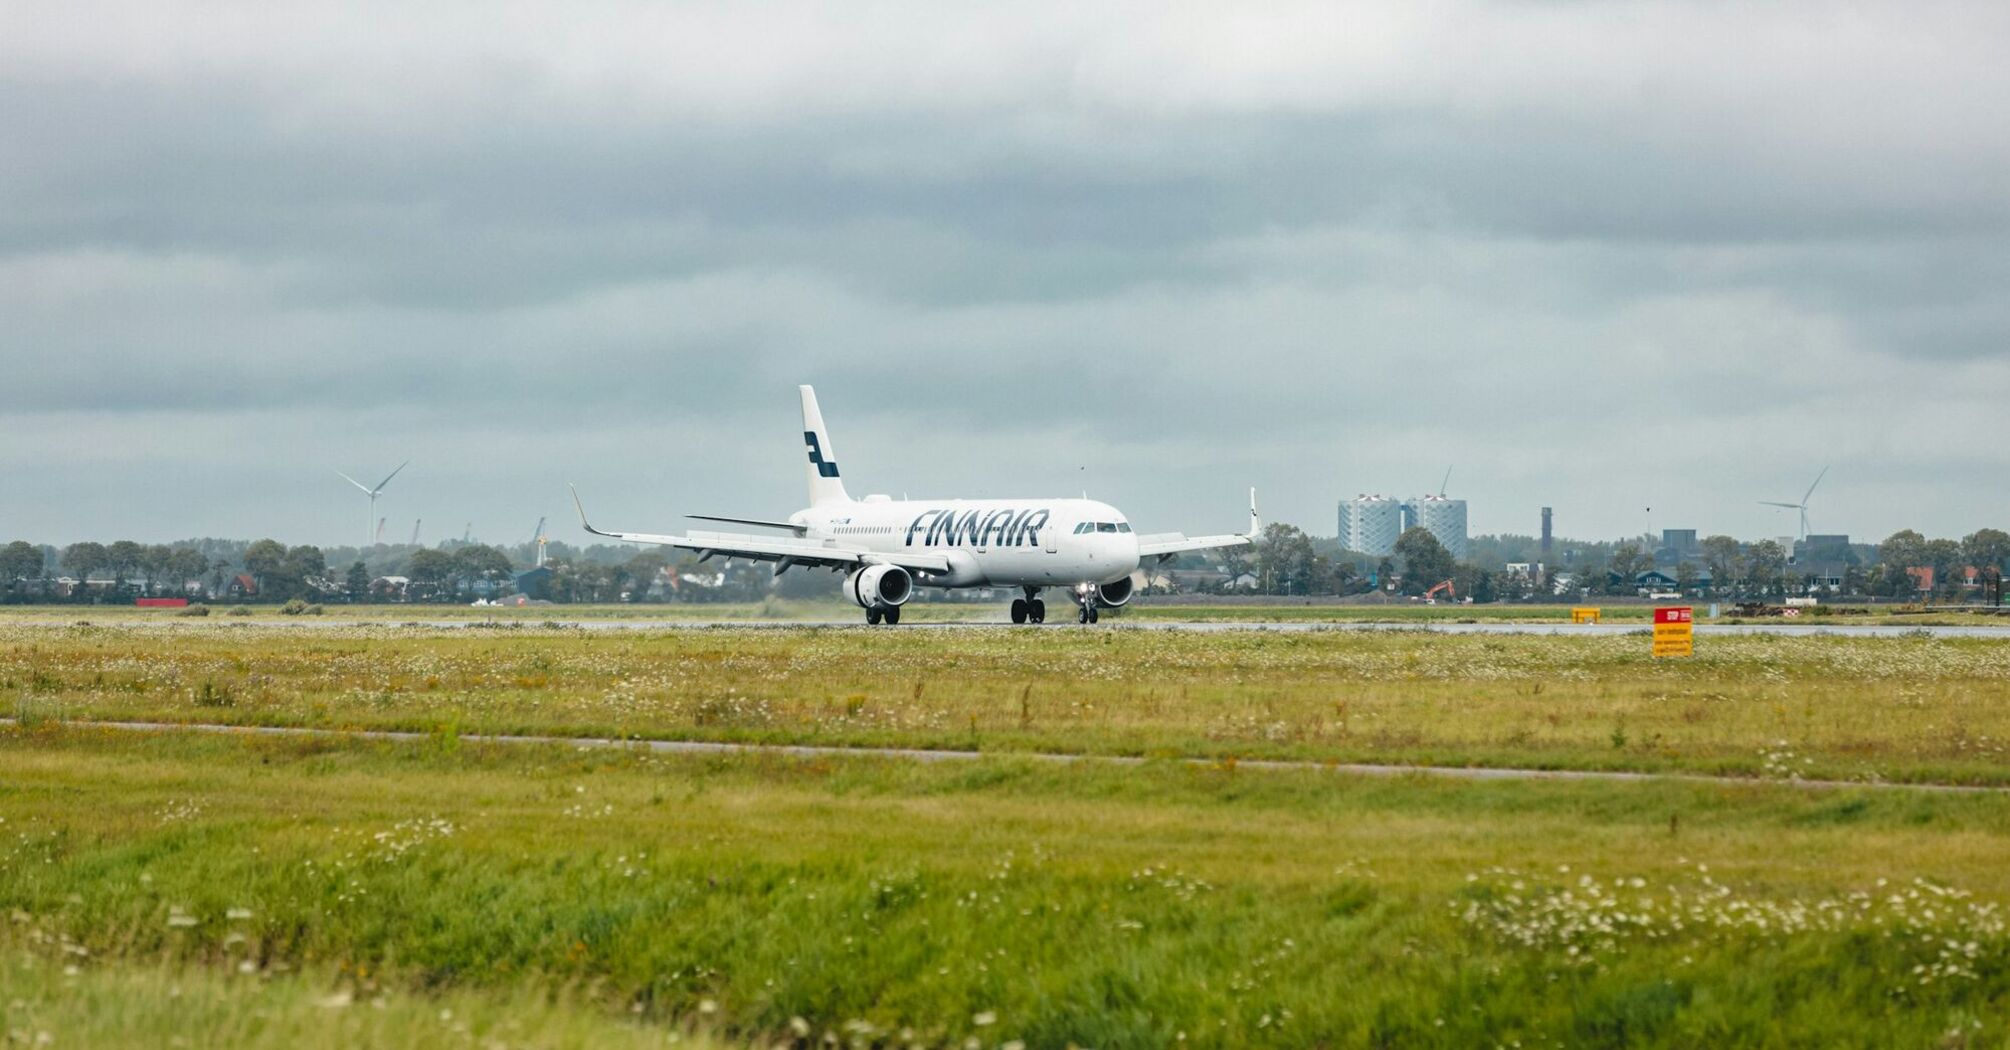 Finnair airplane landing on a runway with urban skyline